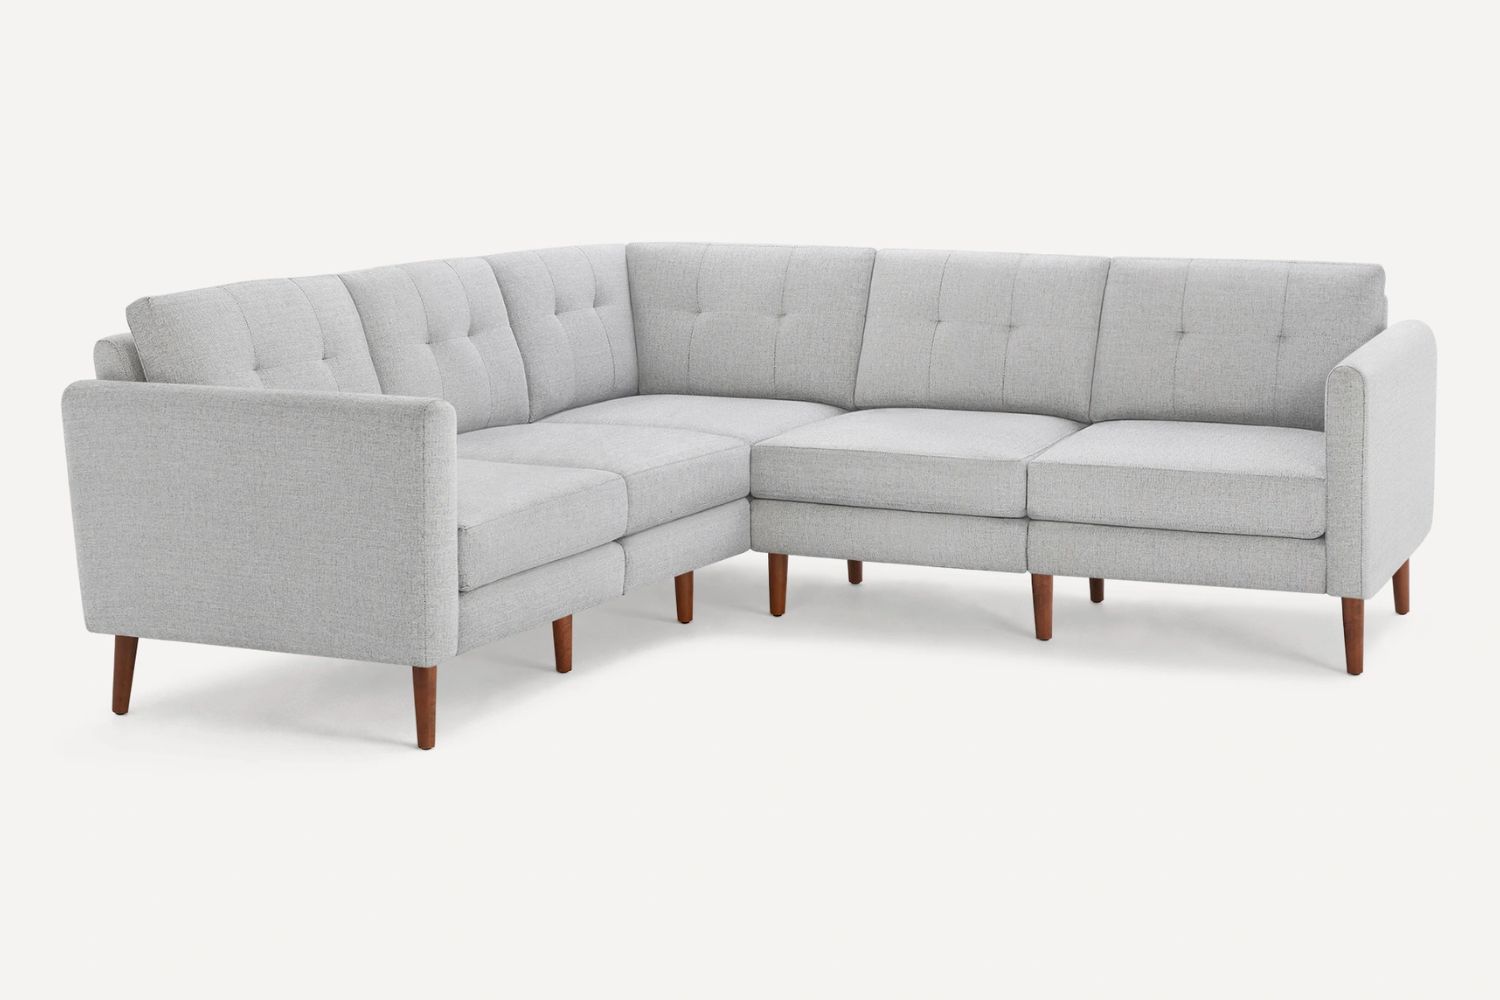 The Best Sofa Brands Option: Burrow